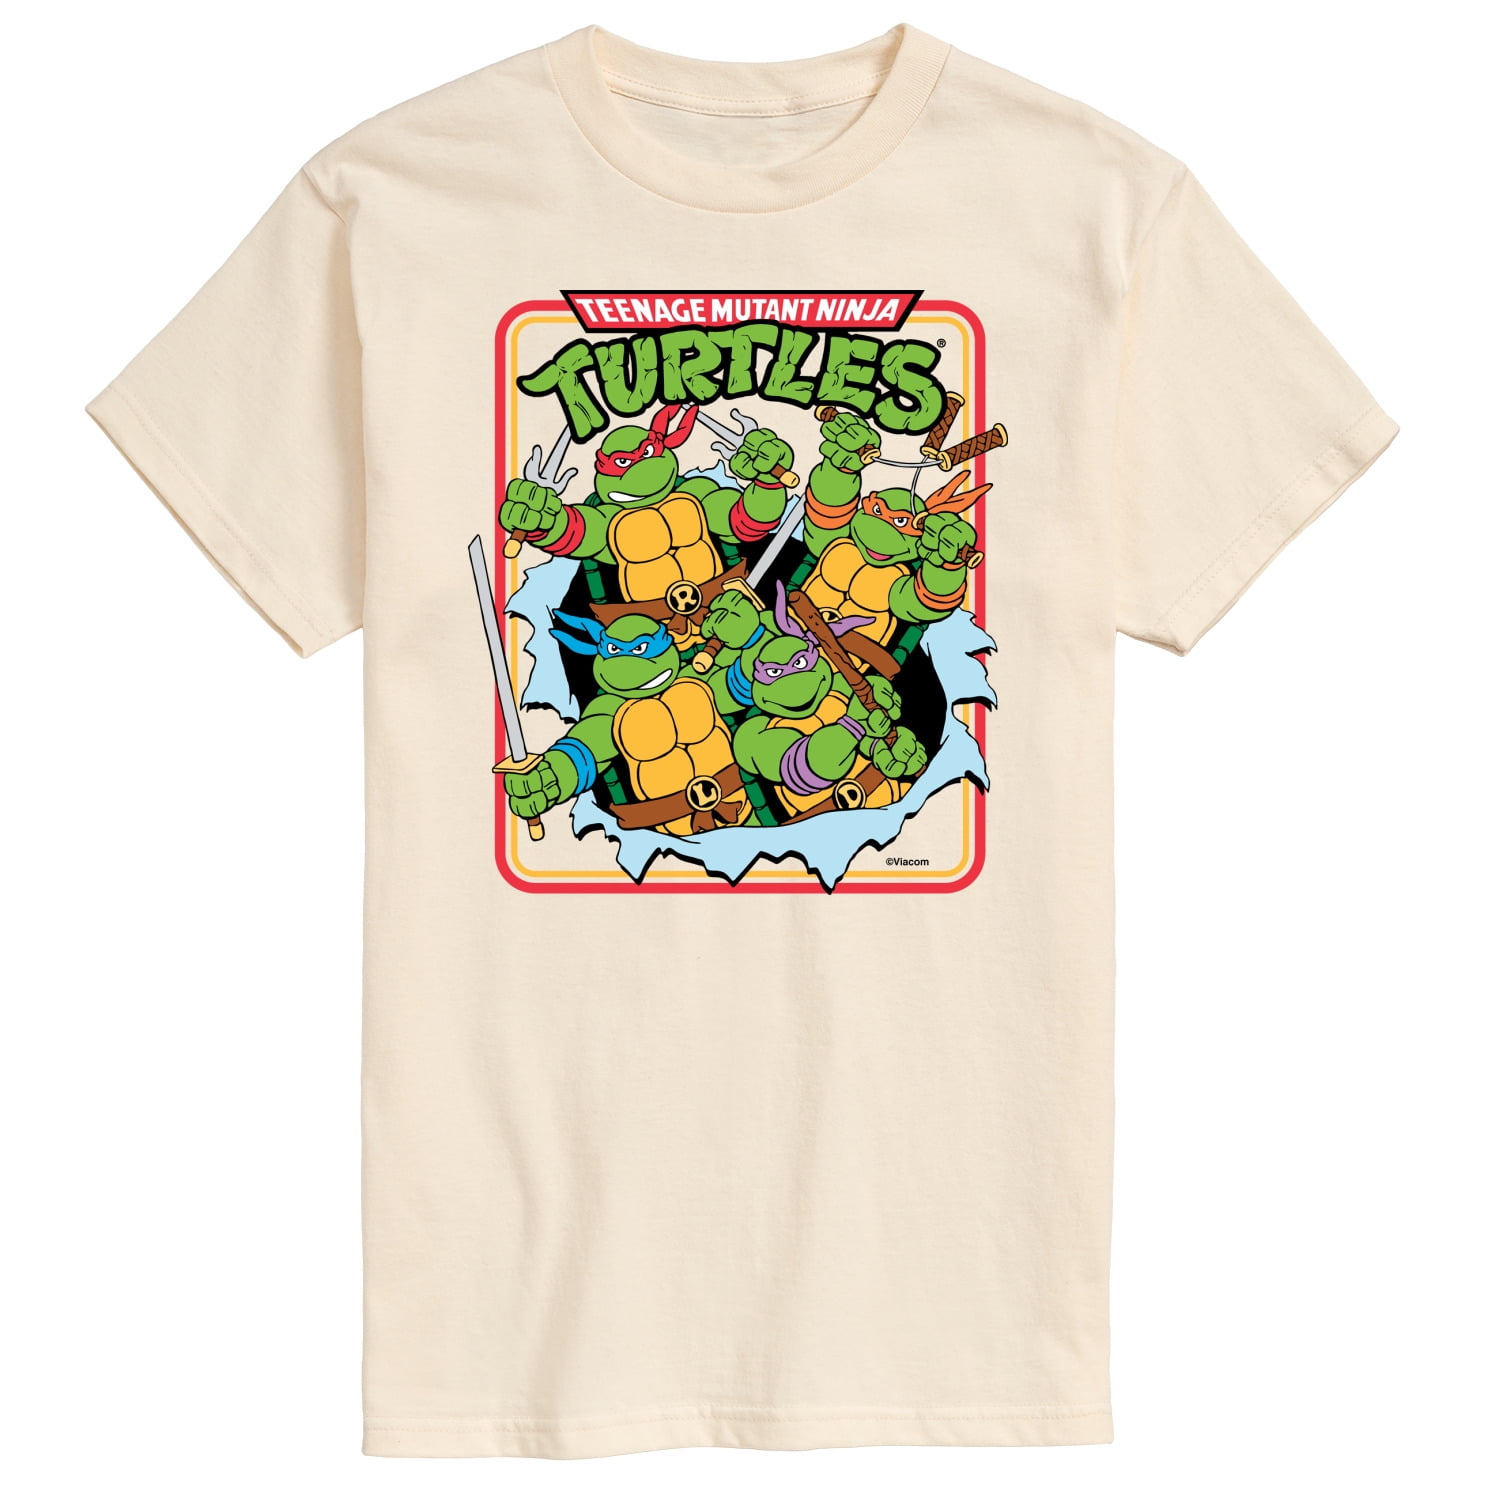 Teenage Mutant Ninja Turtles Men’s Graphic Tee with Short Sleeves, Size  S-3XL